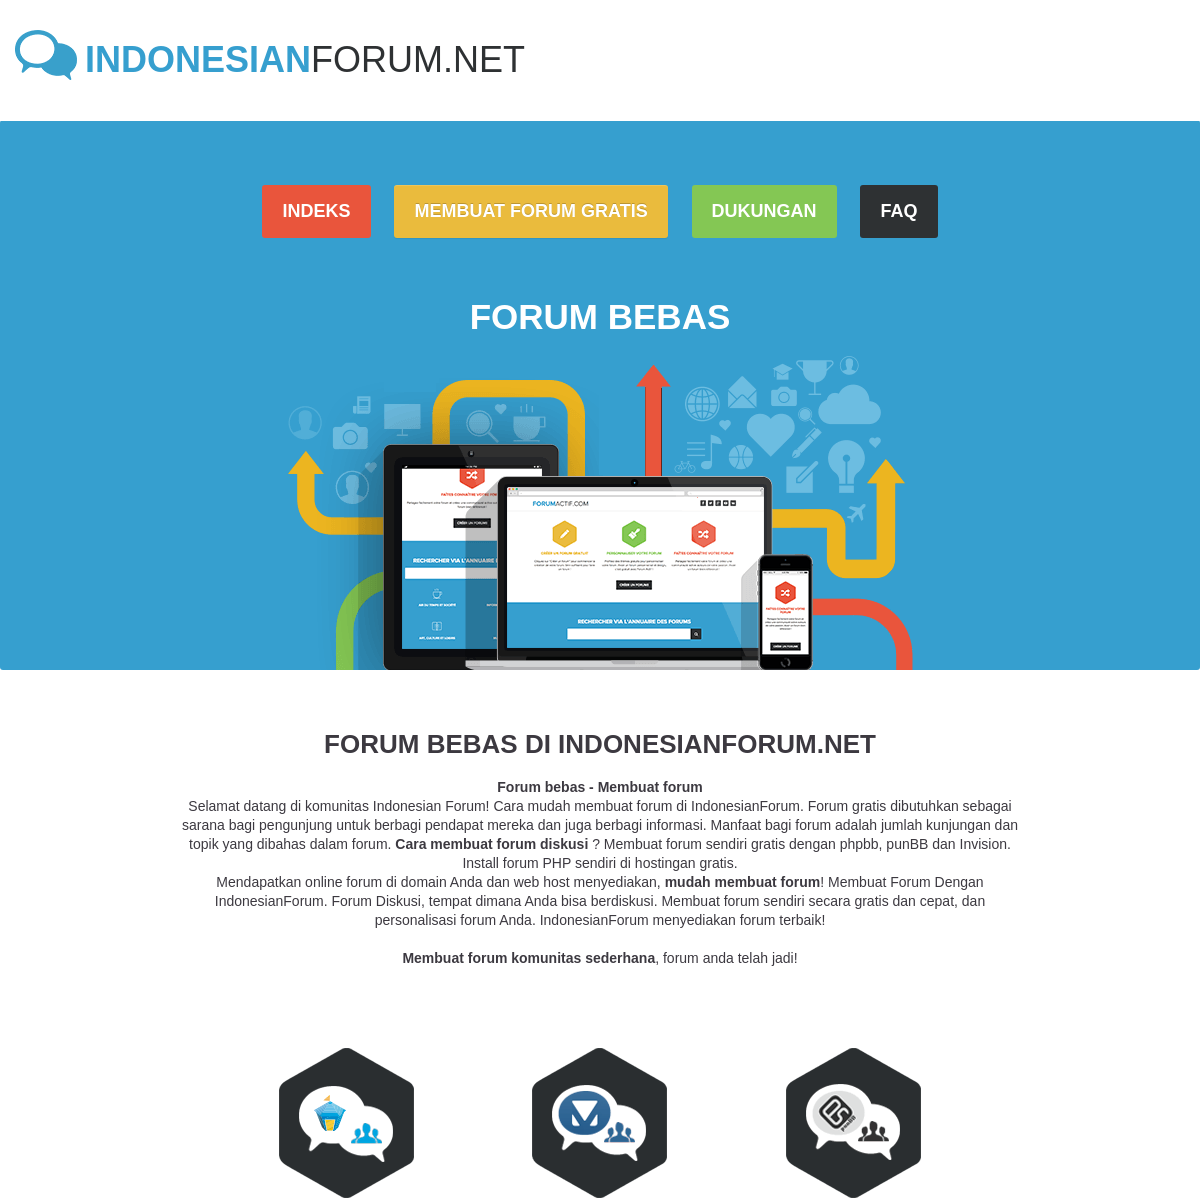 A complete backup of indonesianforum.net